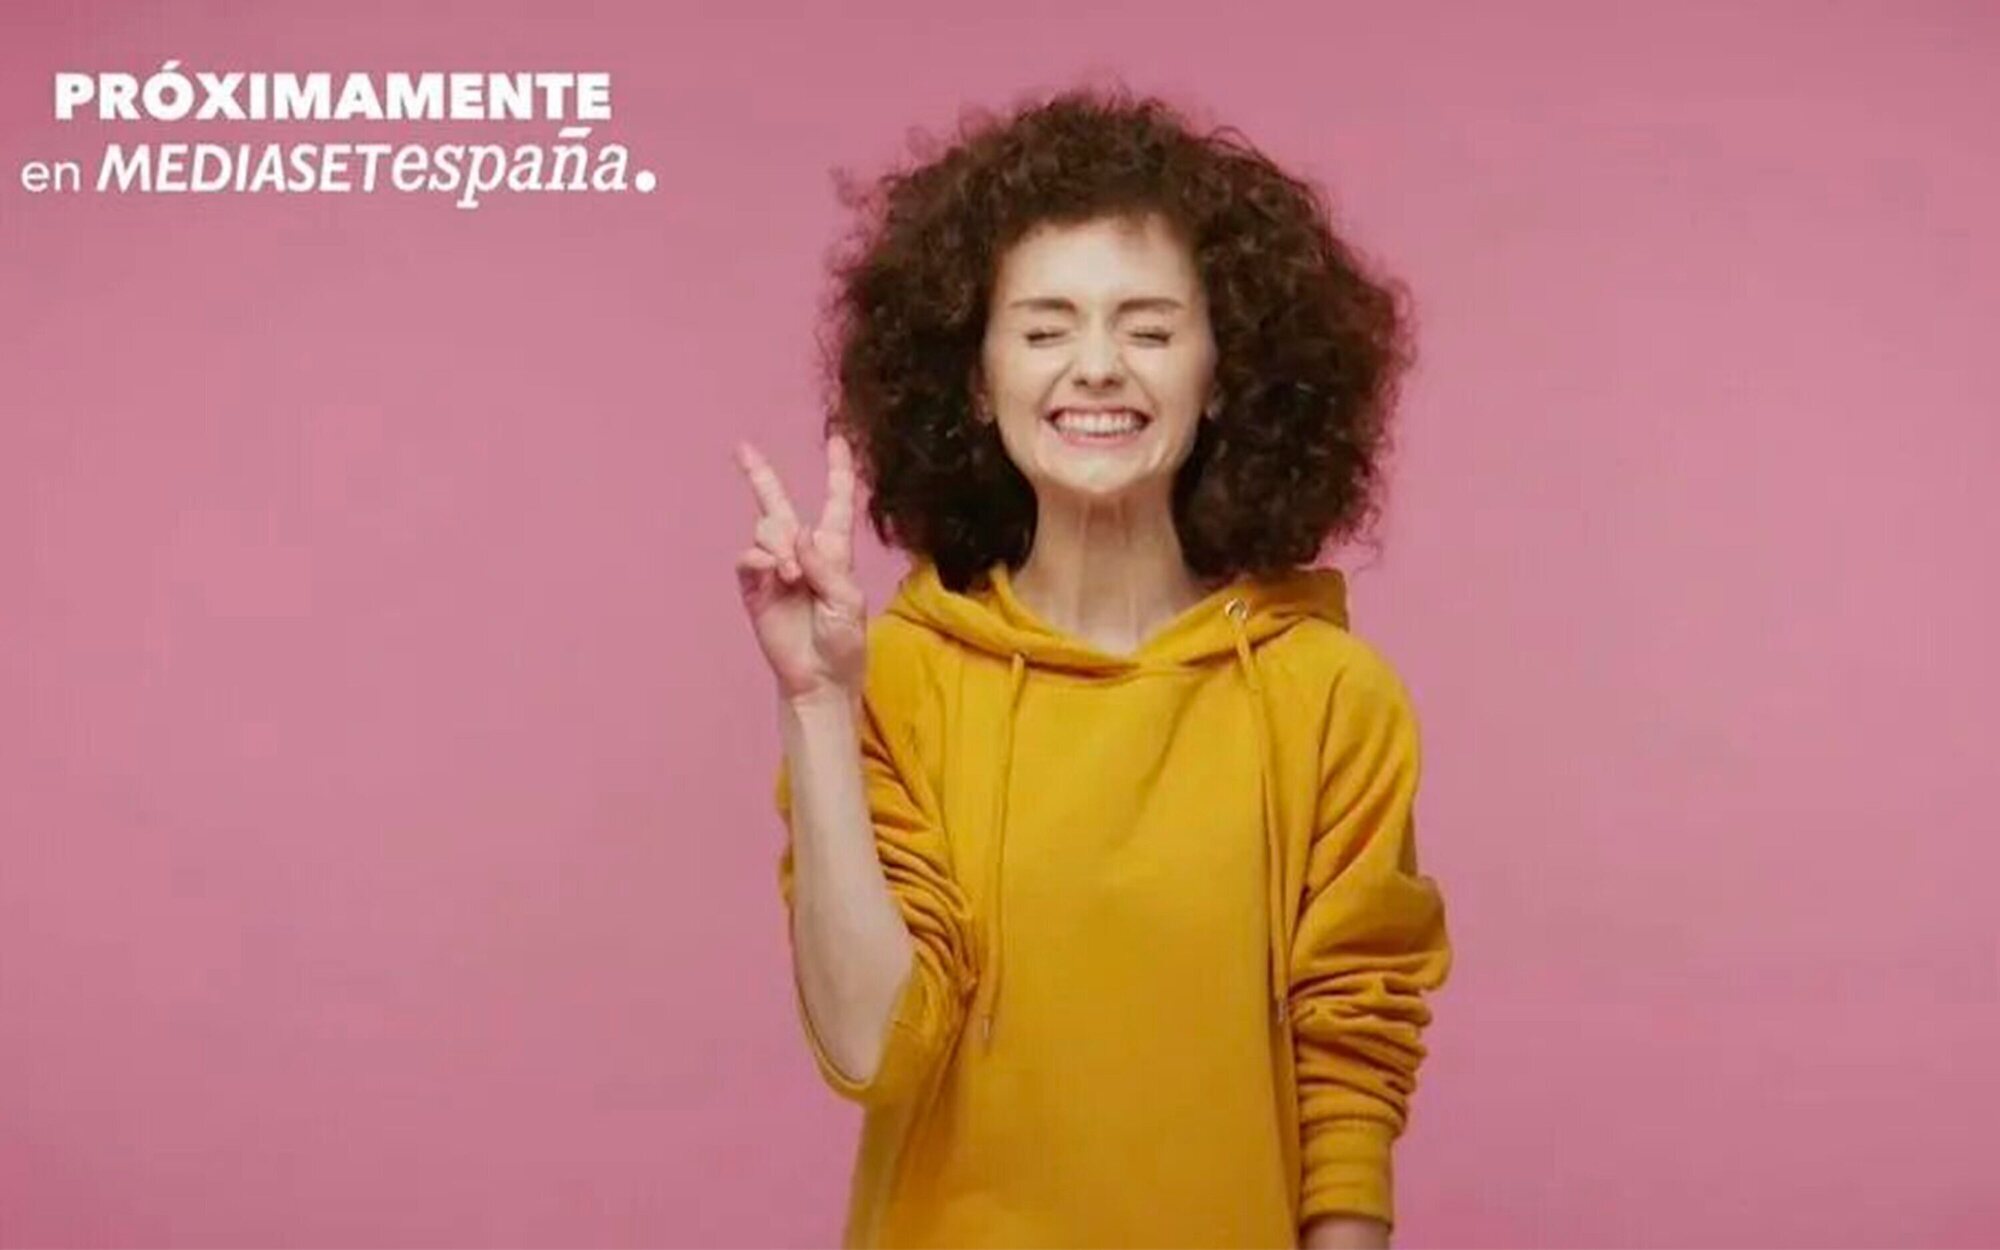 Mediaset anuncia 'Quiero ser famoso', un programa para encontrar al mejor influencer de España